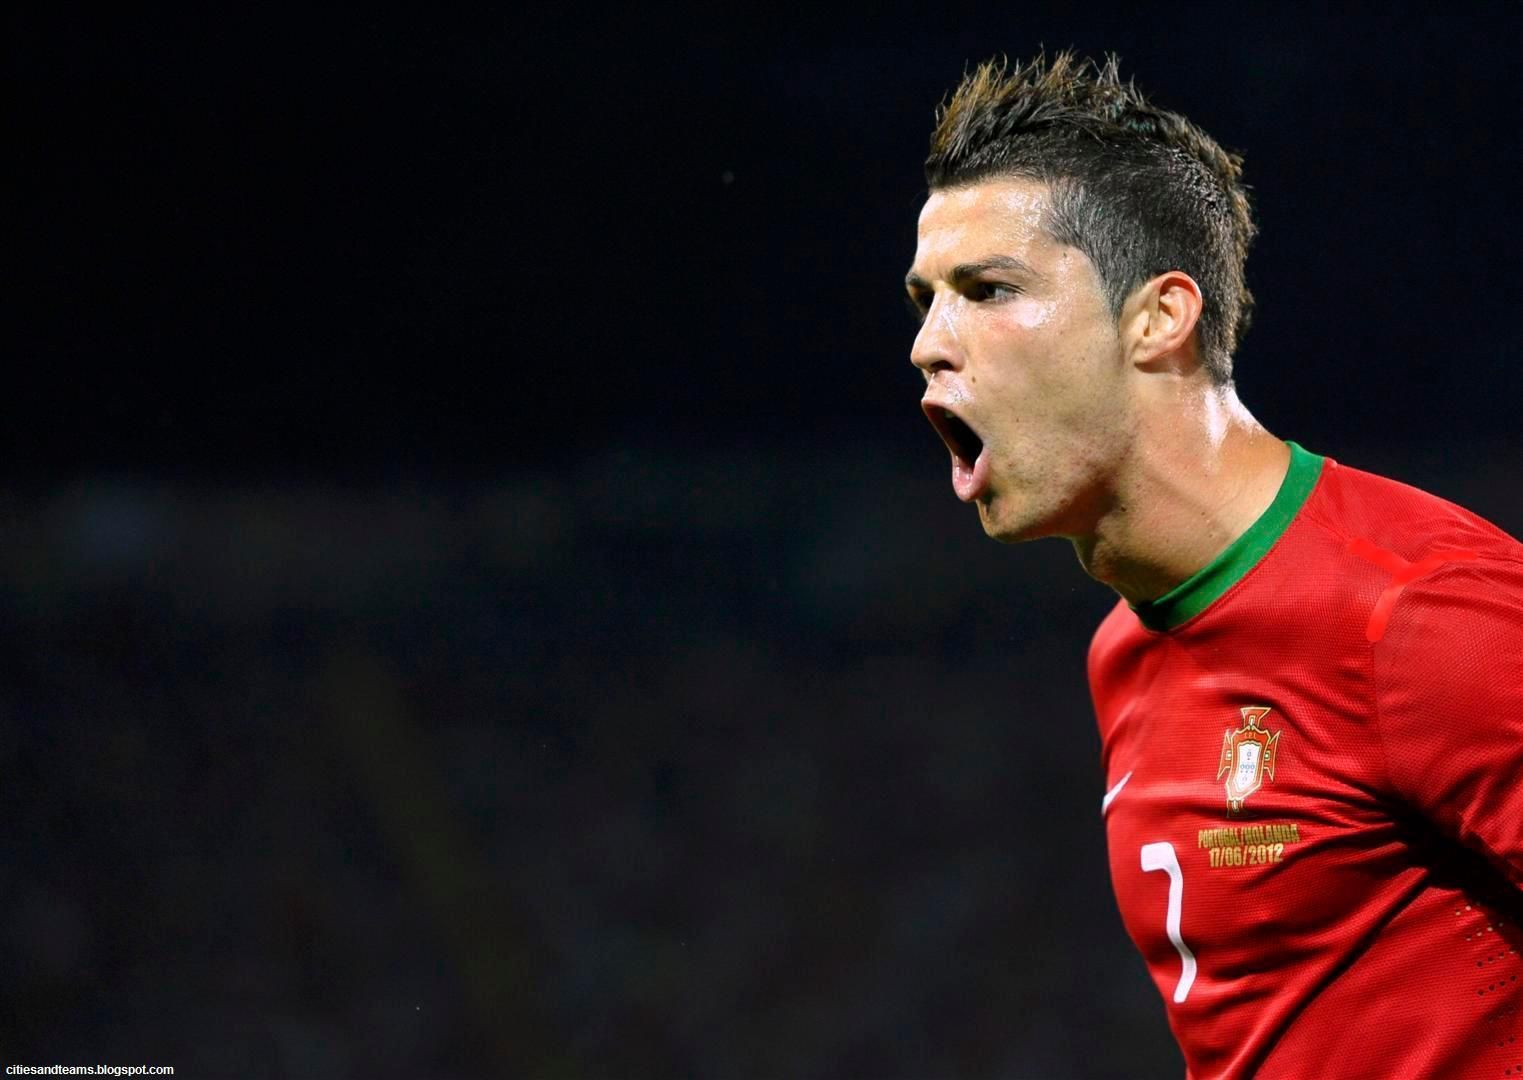 Download free Cristiano Ronaldo Wallpapers in HD - 2015